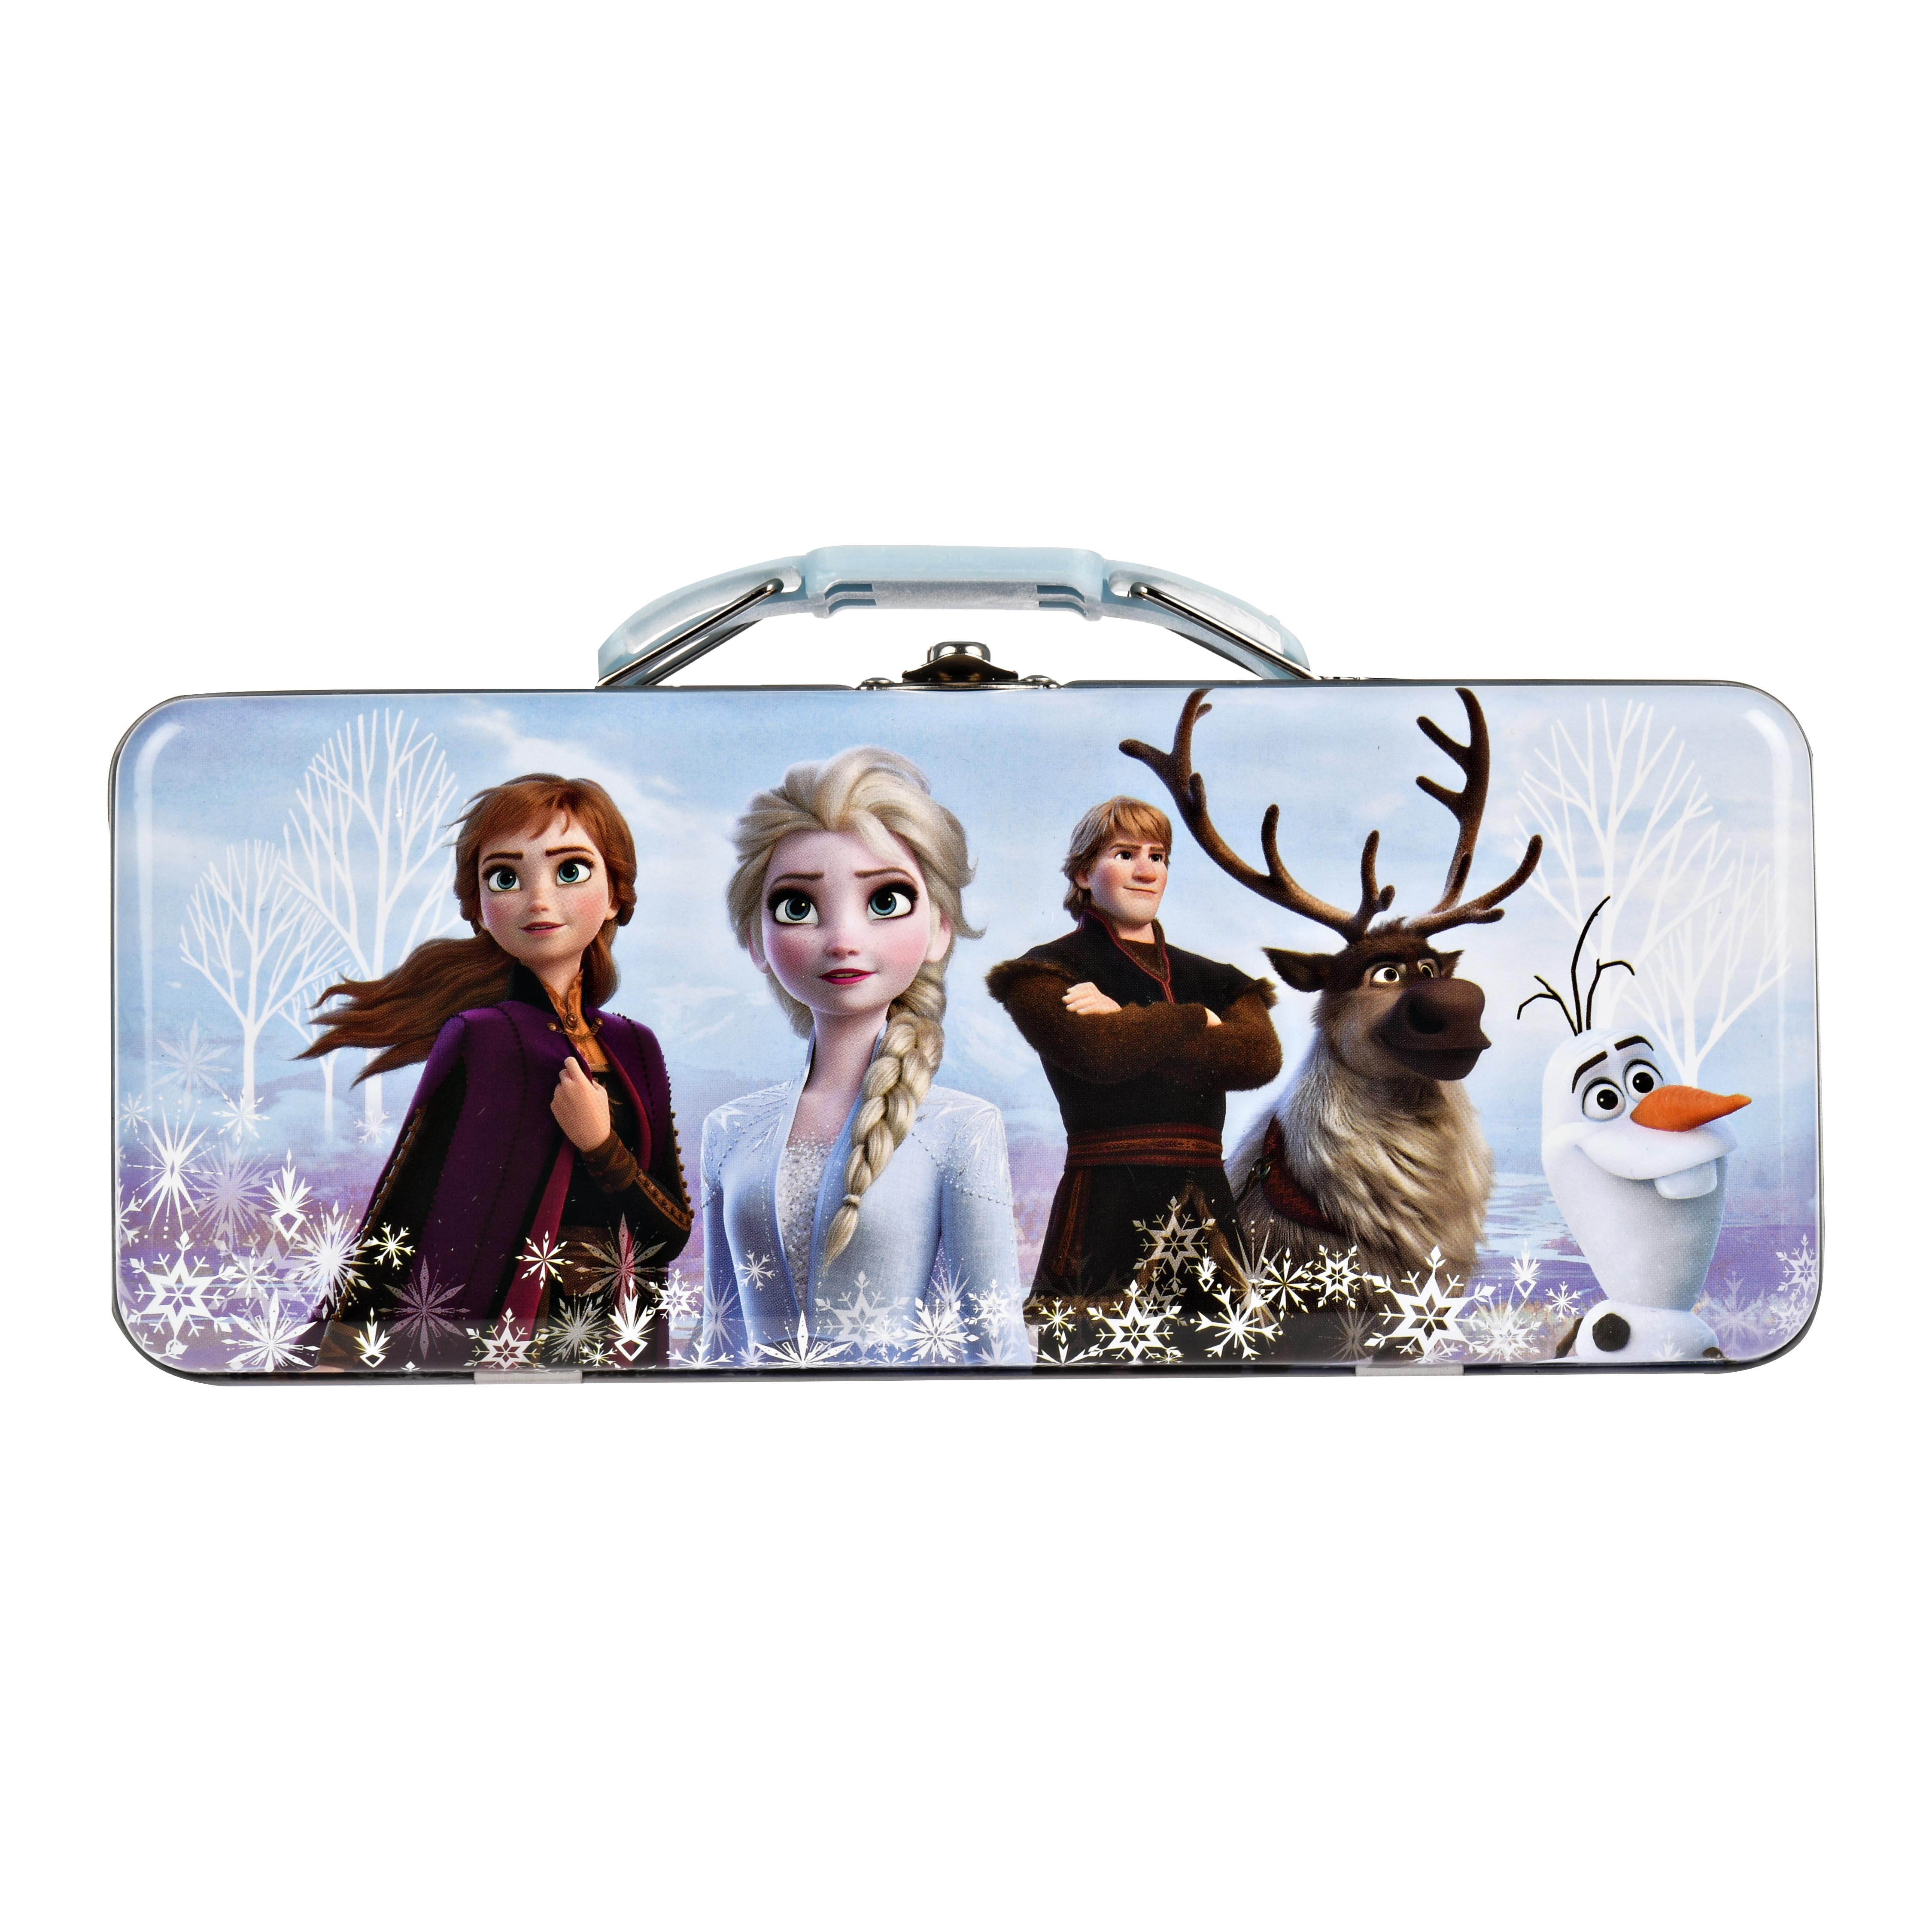 Frozen 2 Tin Tote Box Party Favor - Disney Frozen and Frozen 2